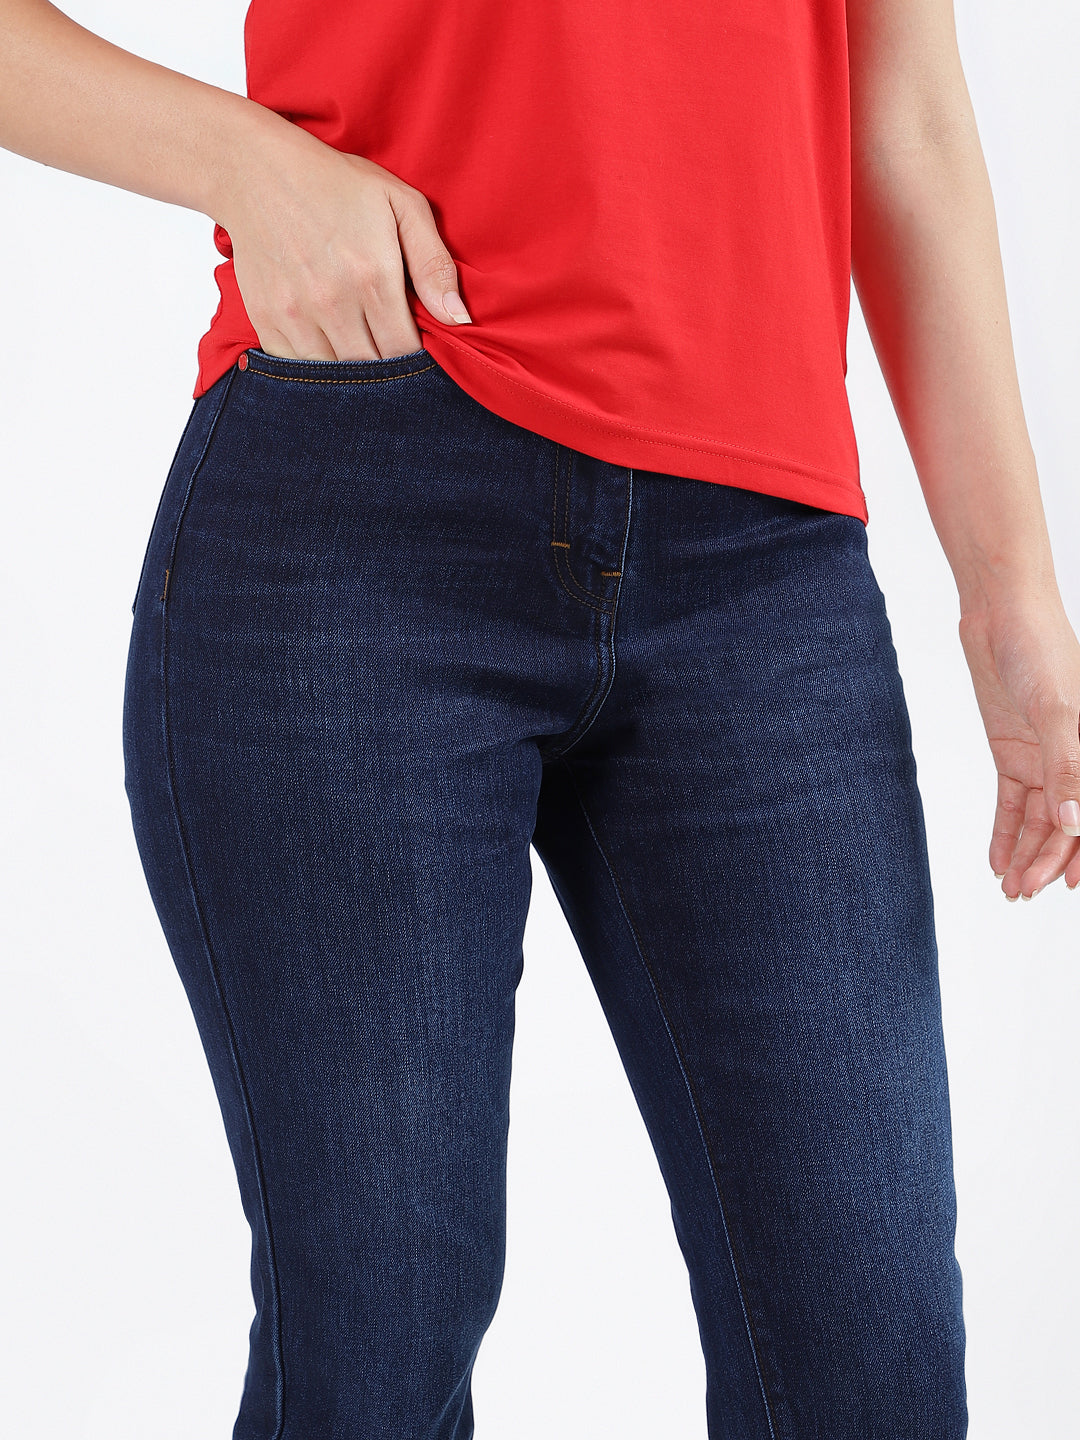 A|X Armani Exchange Women's Basic Dark and Faded Denim Wash 5 Pocket Skinny  Jeans, Indigo Blue, 25 at Amazon Women's Jeans store